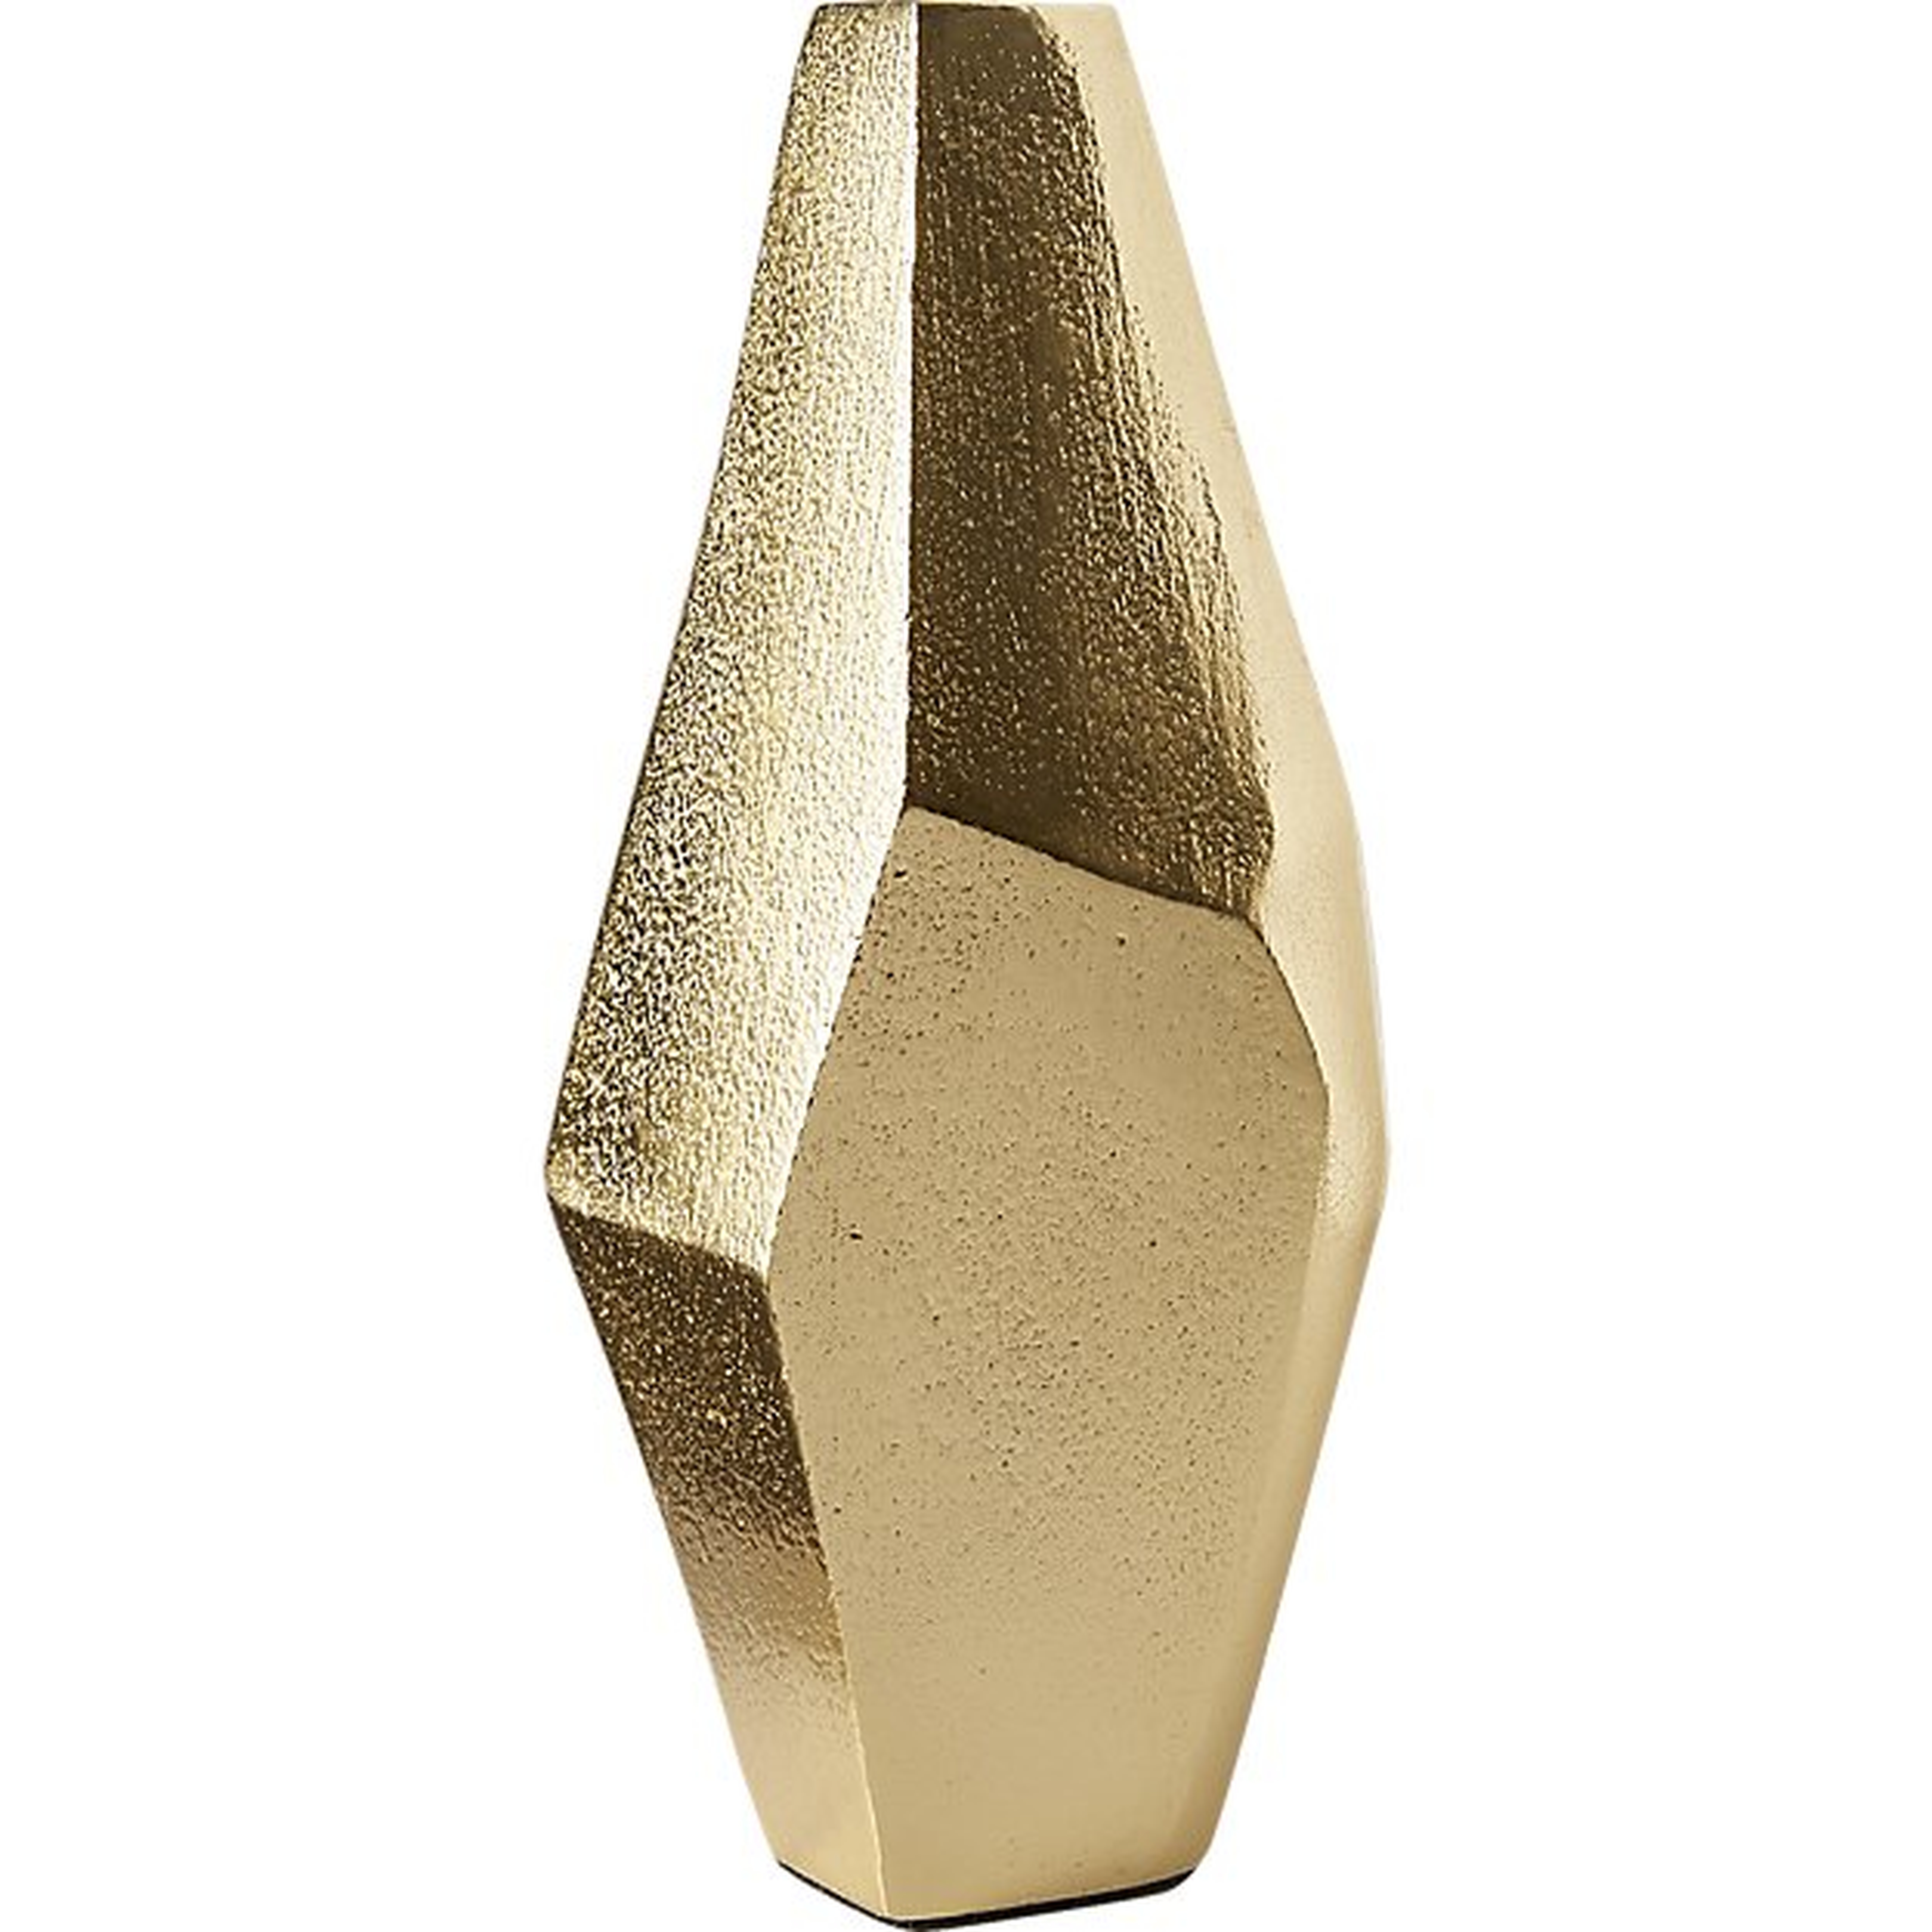 Von Gold Geometric Vase - CB2